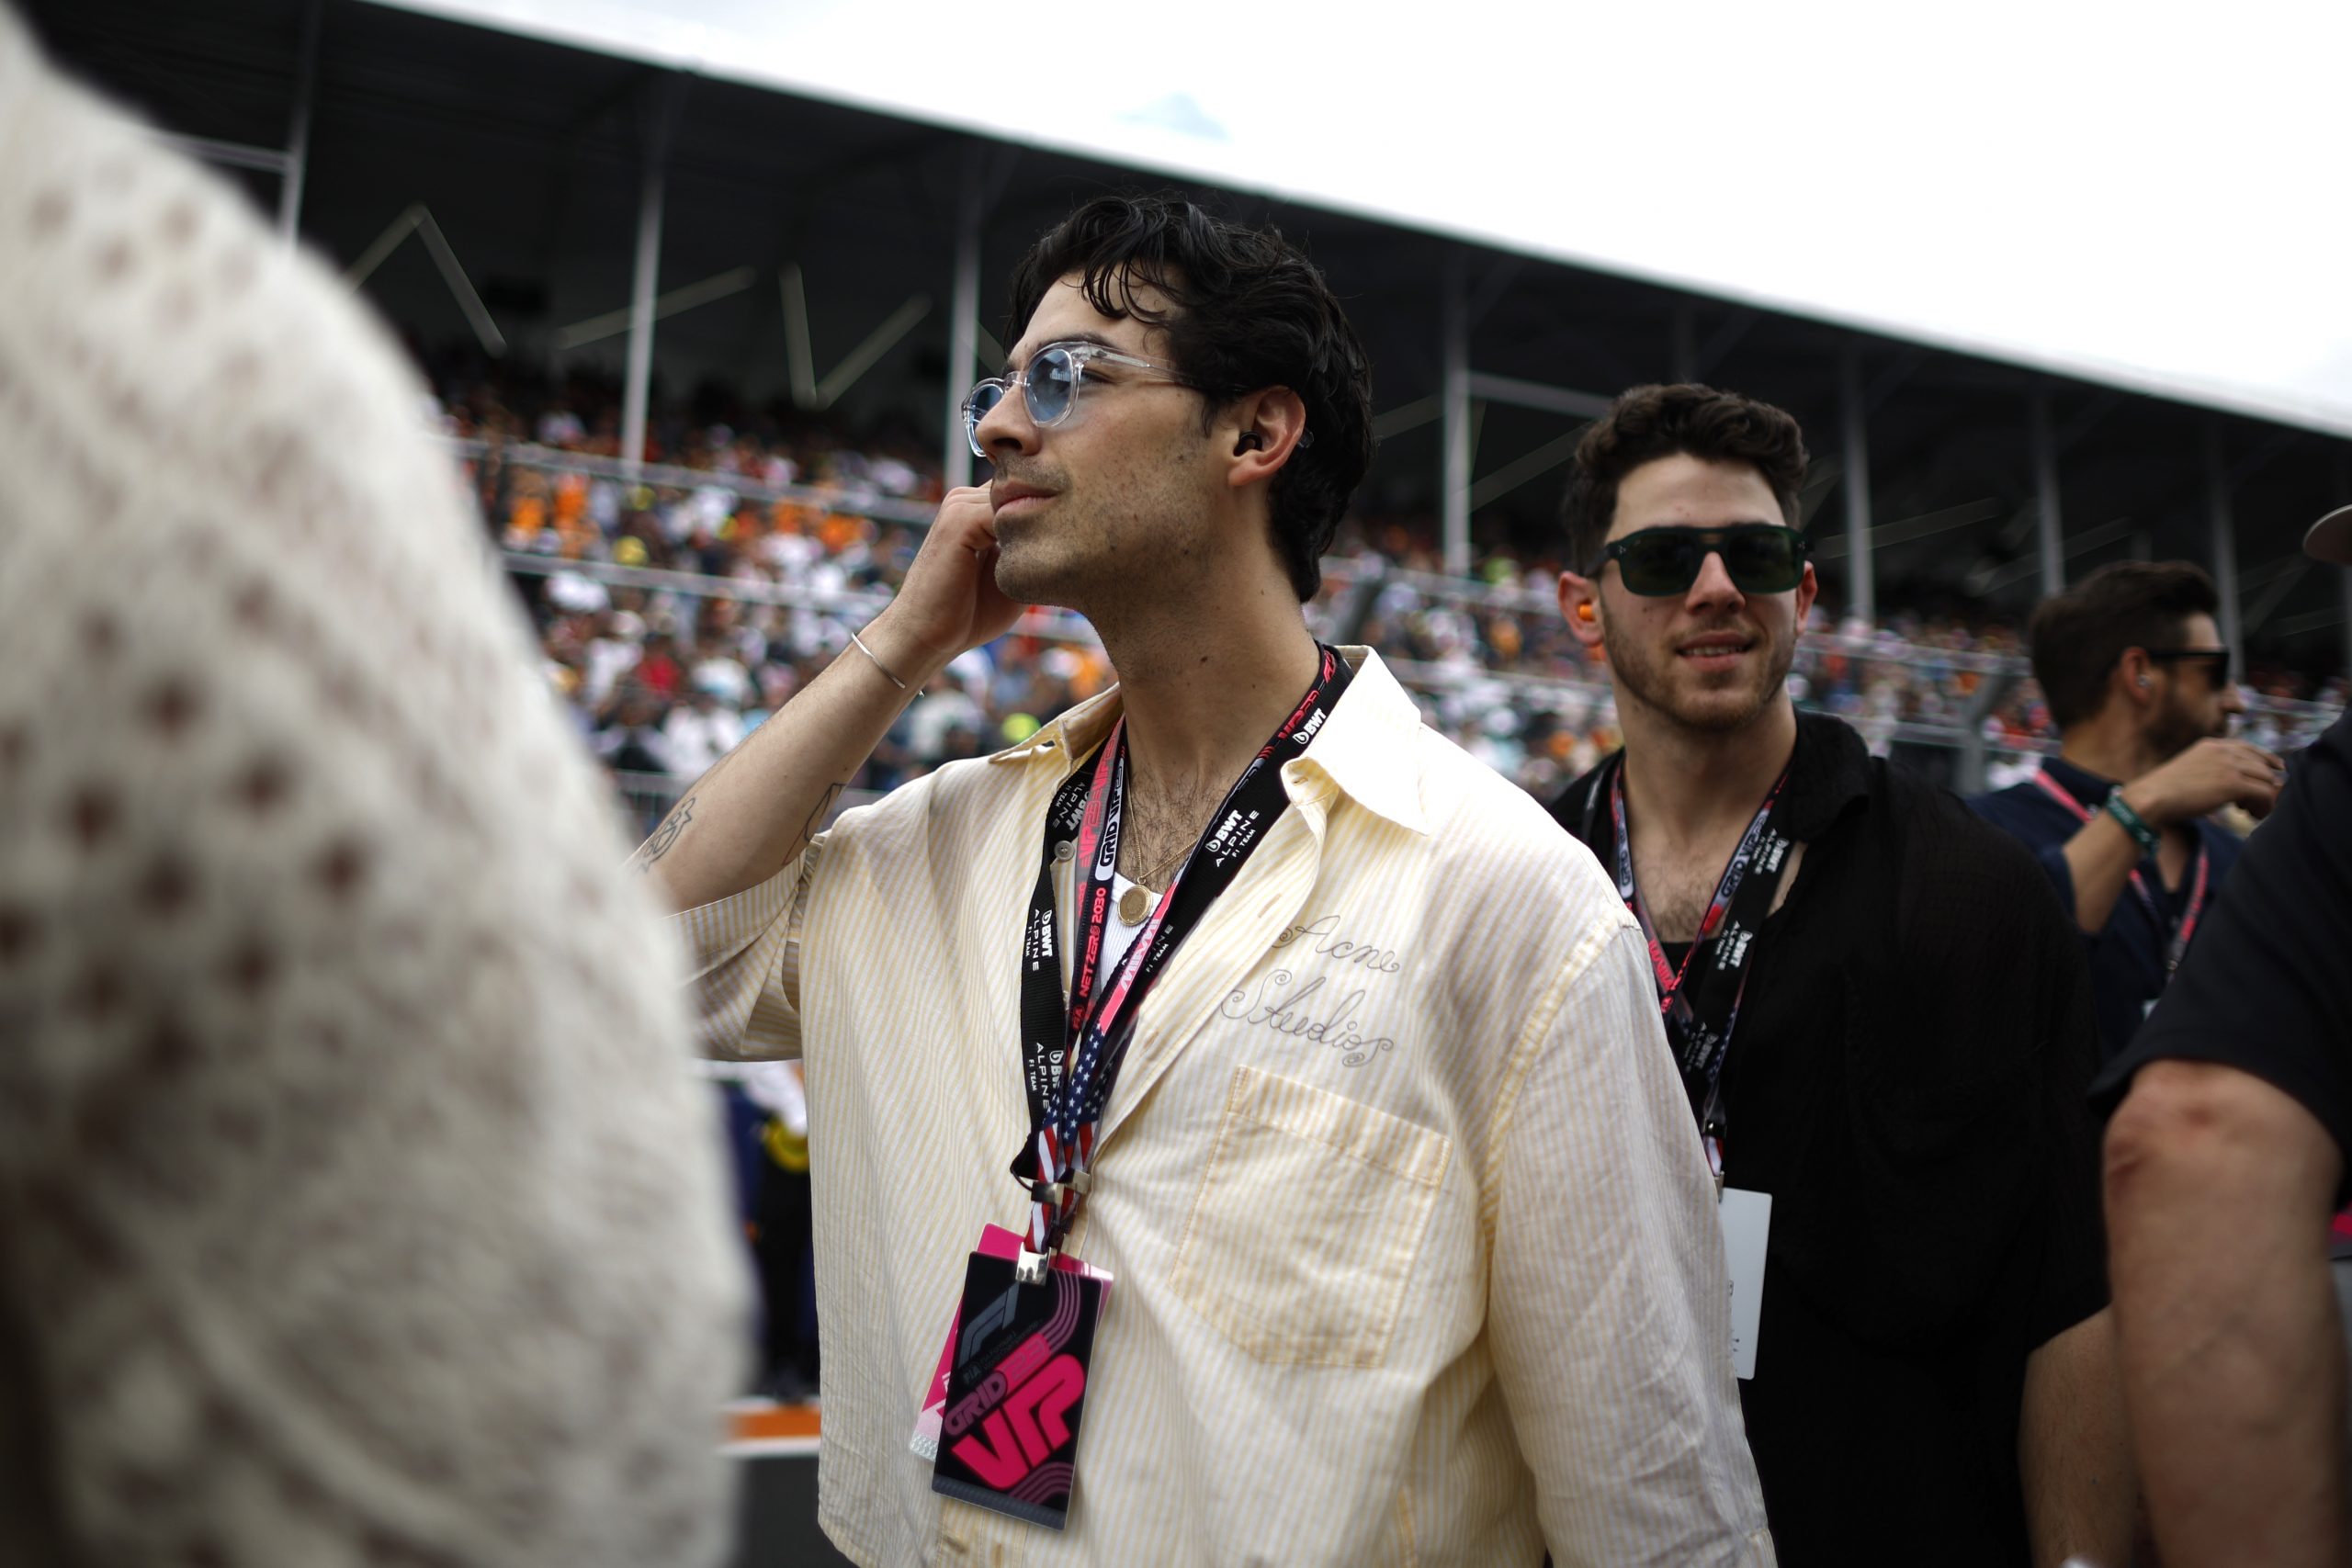 Joe Jonas wears sunglasses and artist credentials as fans sit behind him